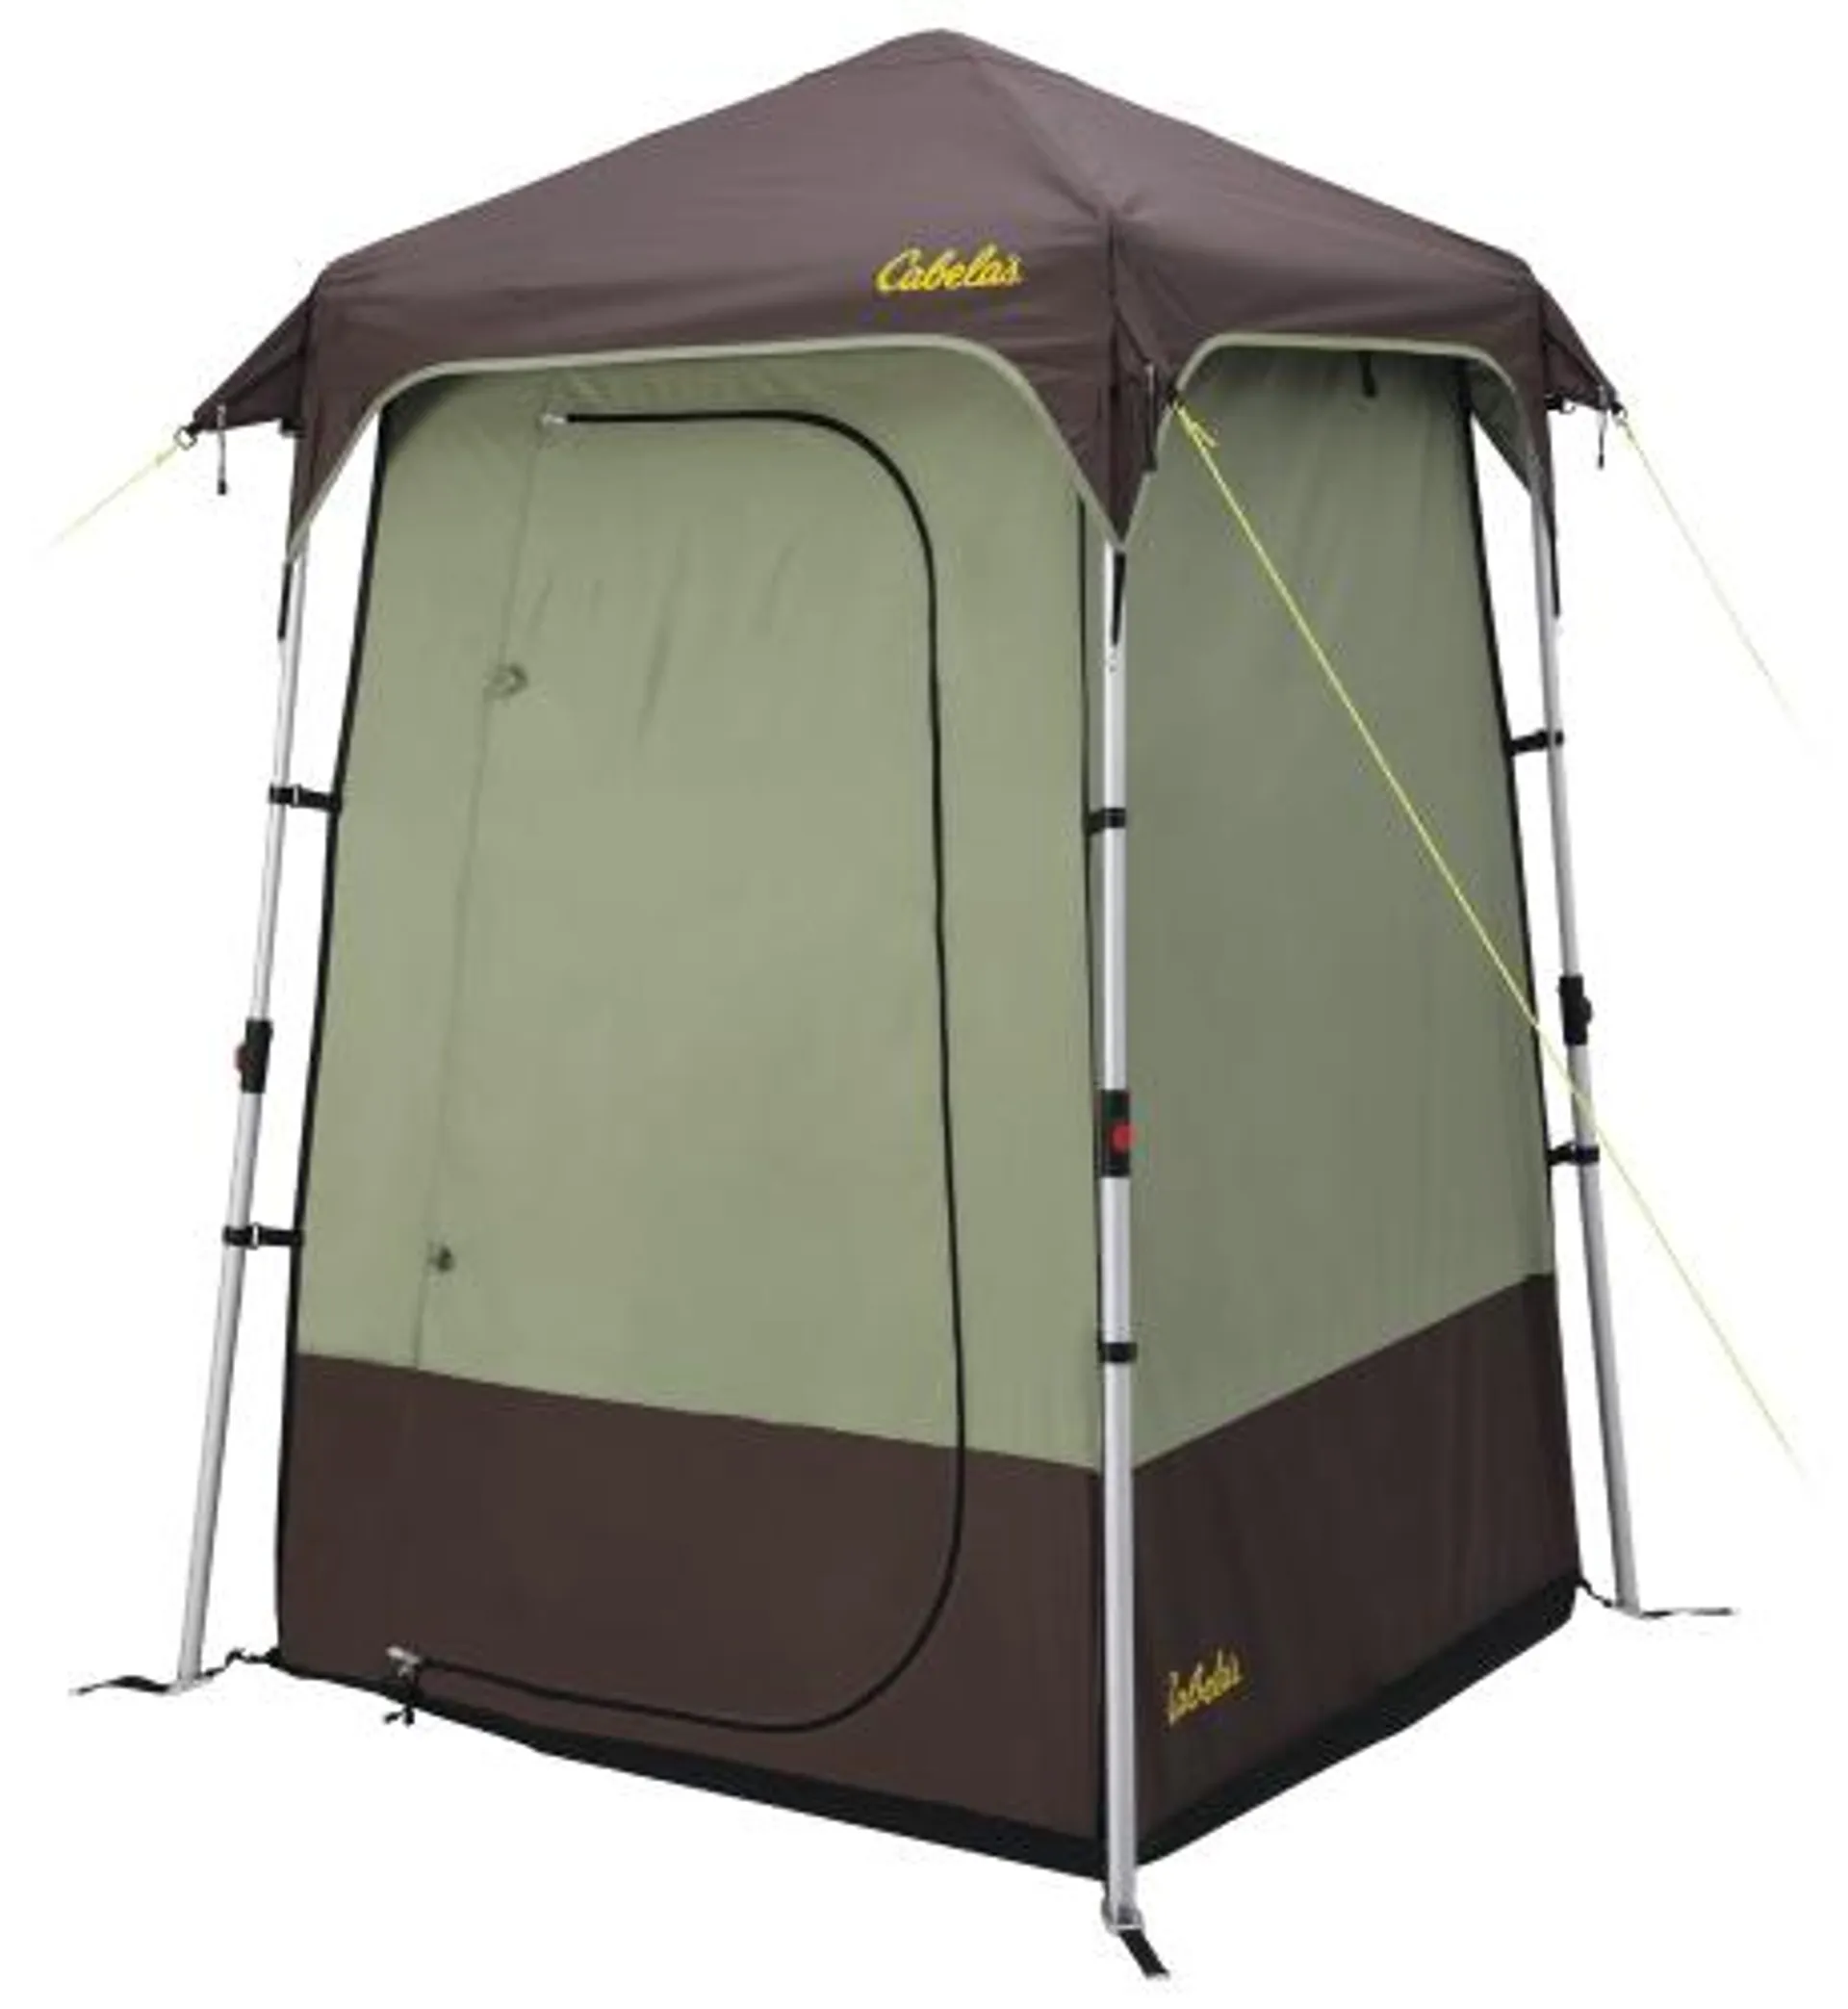 Cabela's Easy-Up Deluxe Shower Shelter